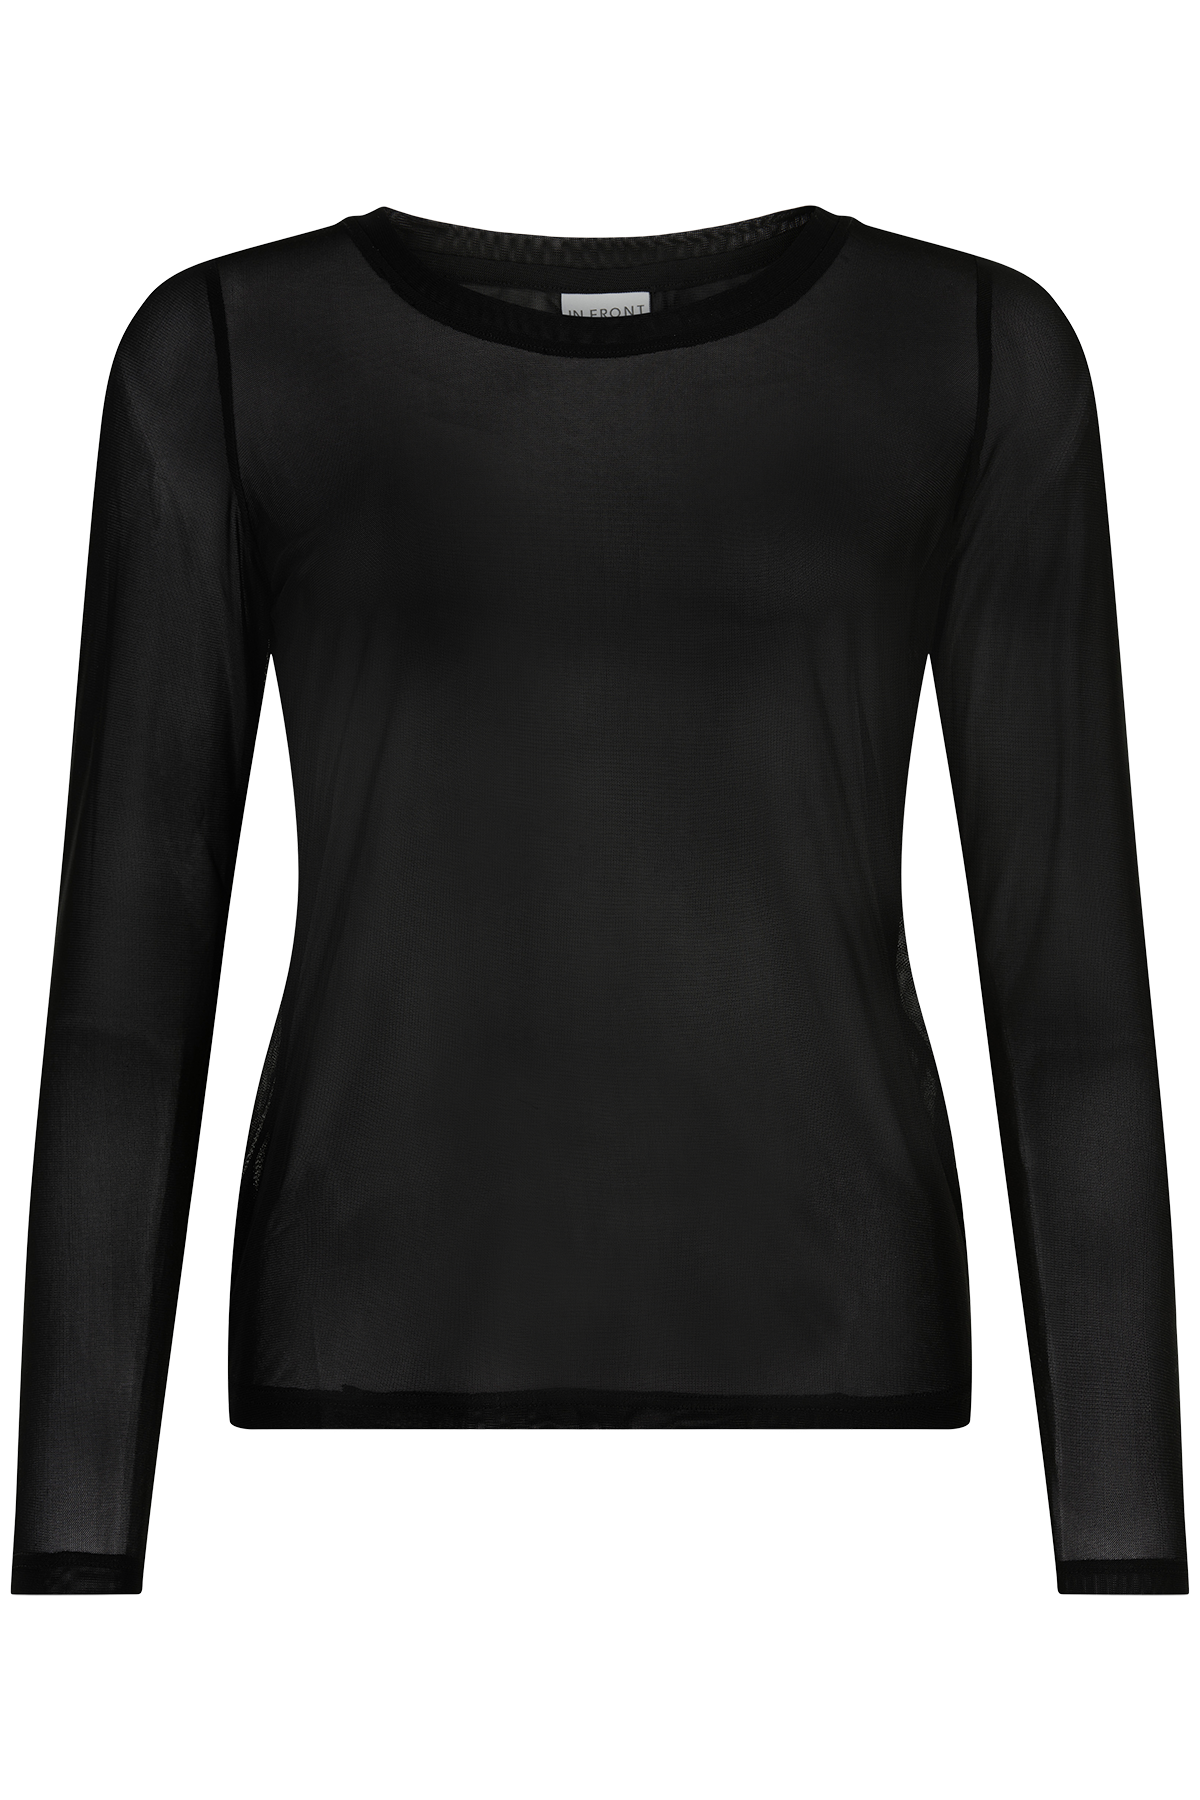 Se IN FRONT Gro Mesh T-shirt, Farve: Black, Størrelse: XL, Dame hos Infront Women